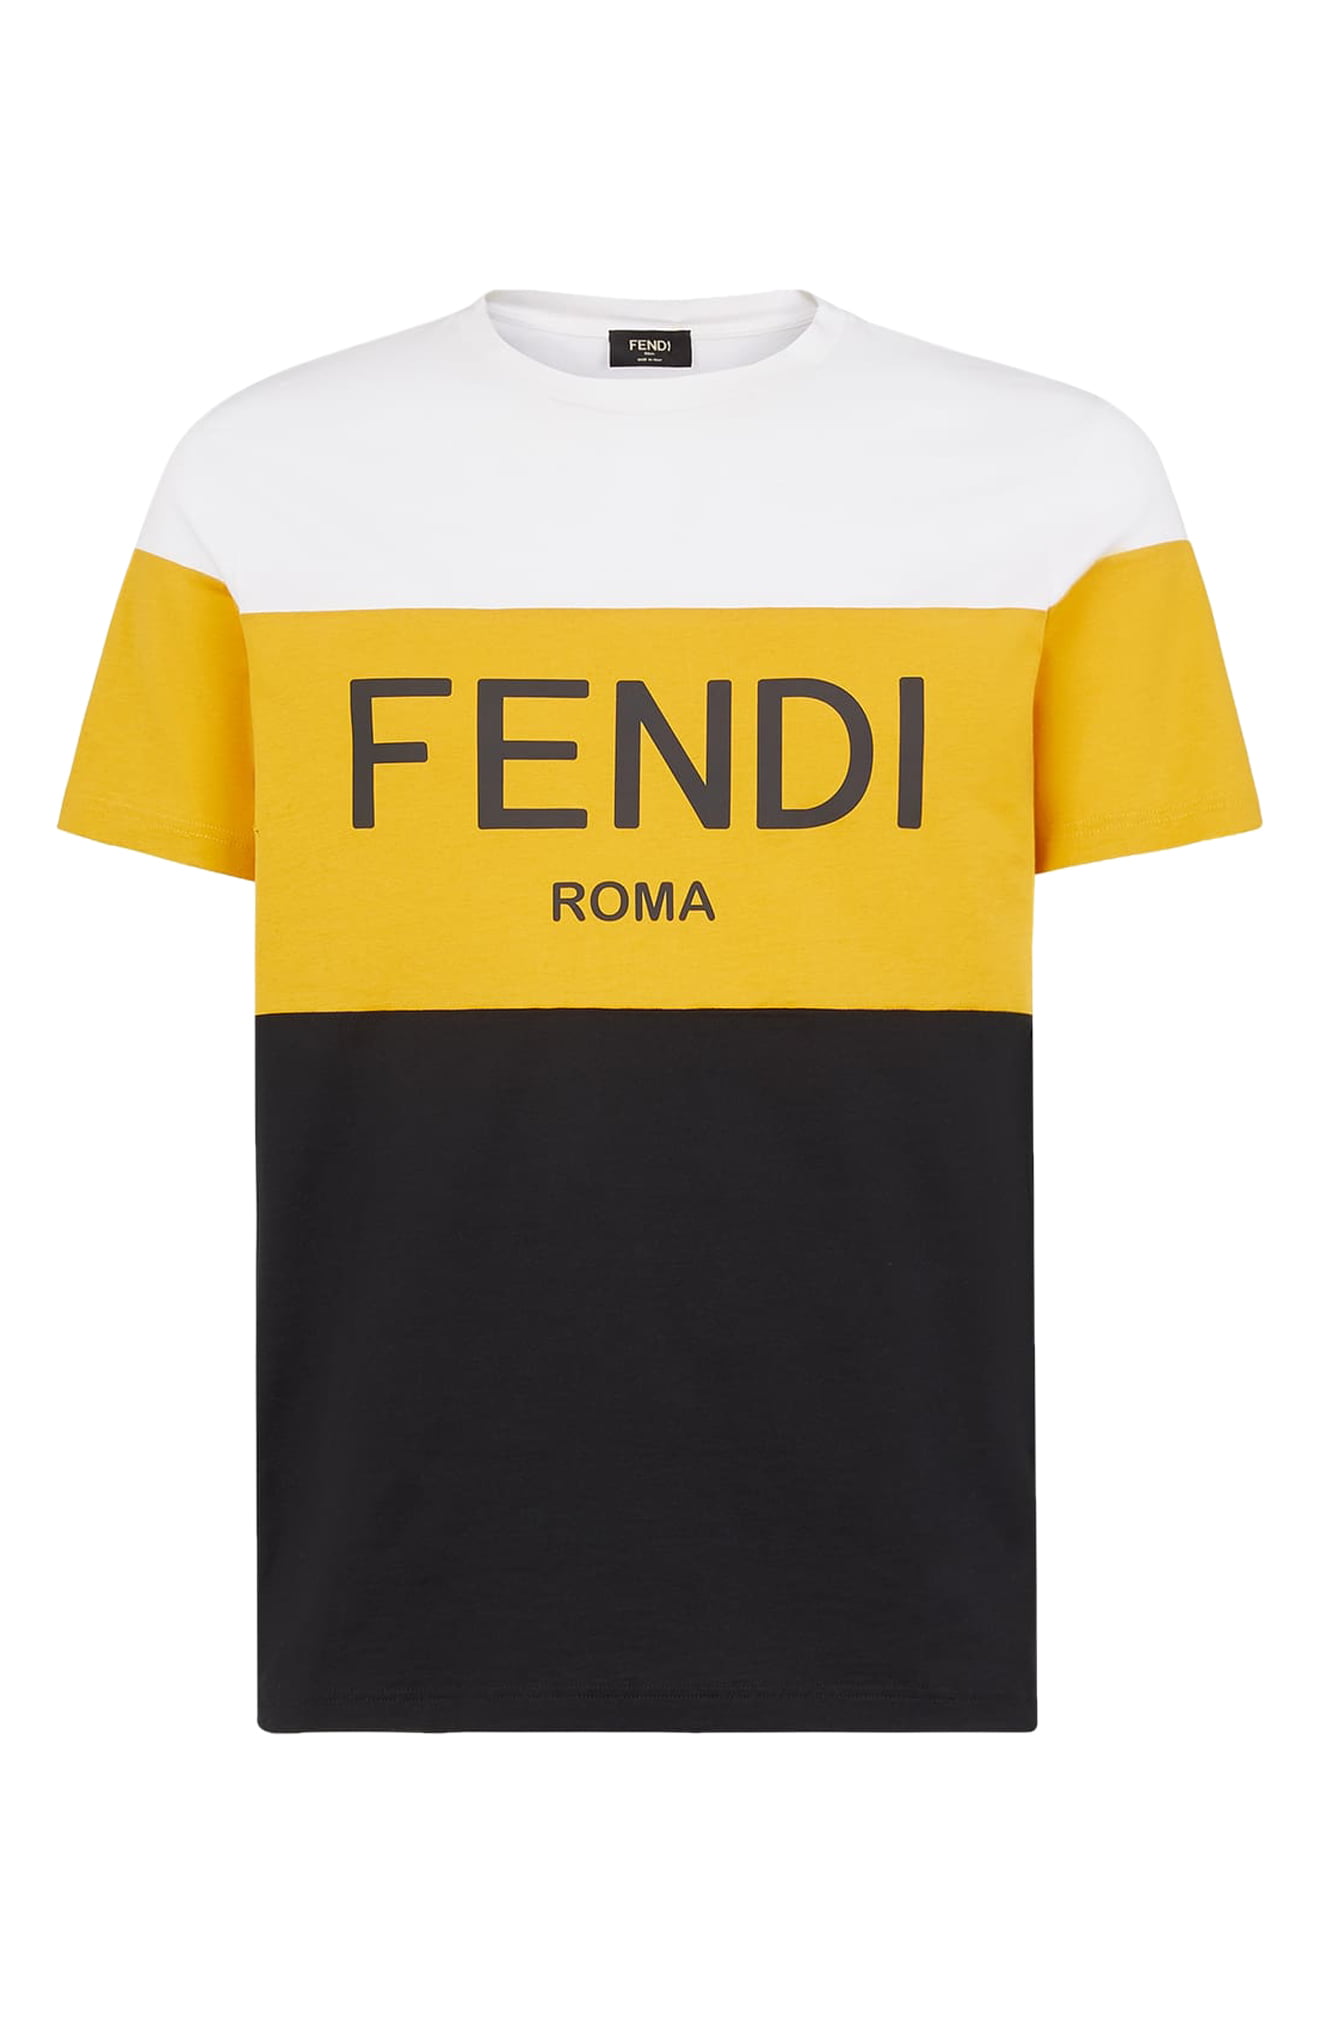 fendi black and yellow shirt